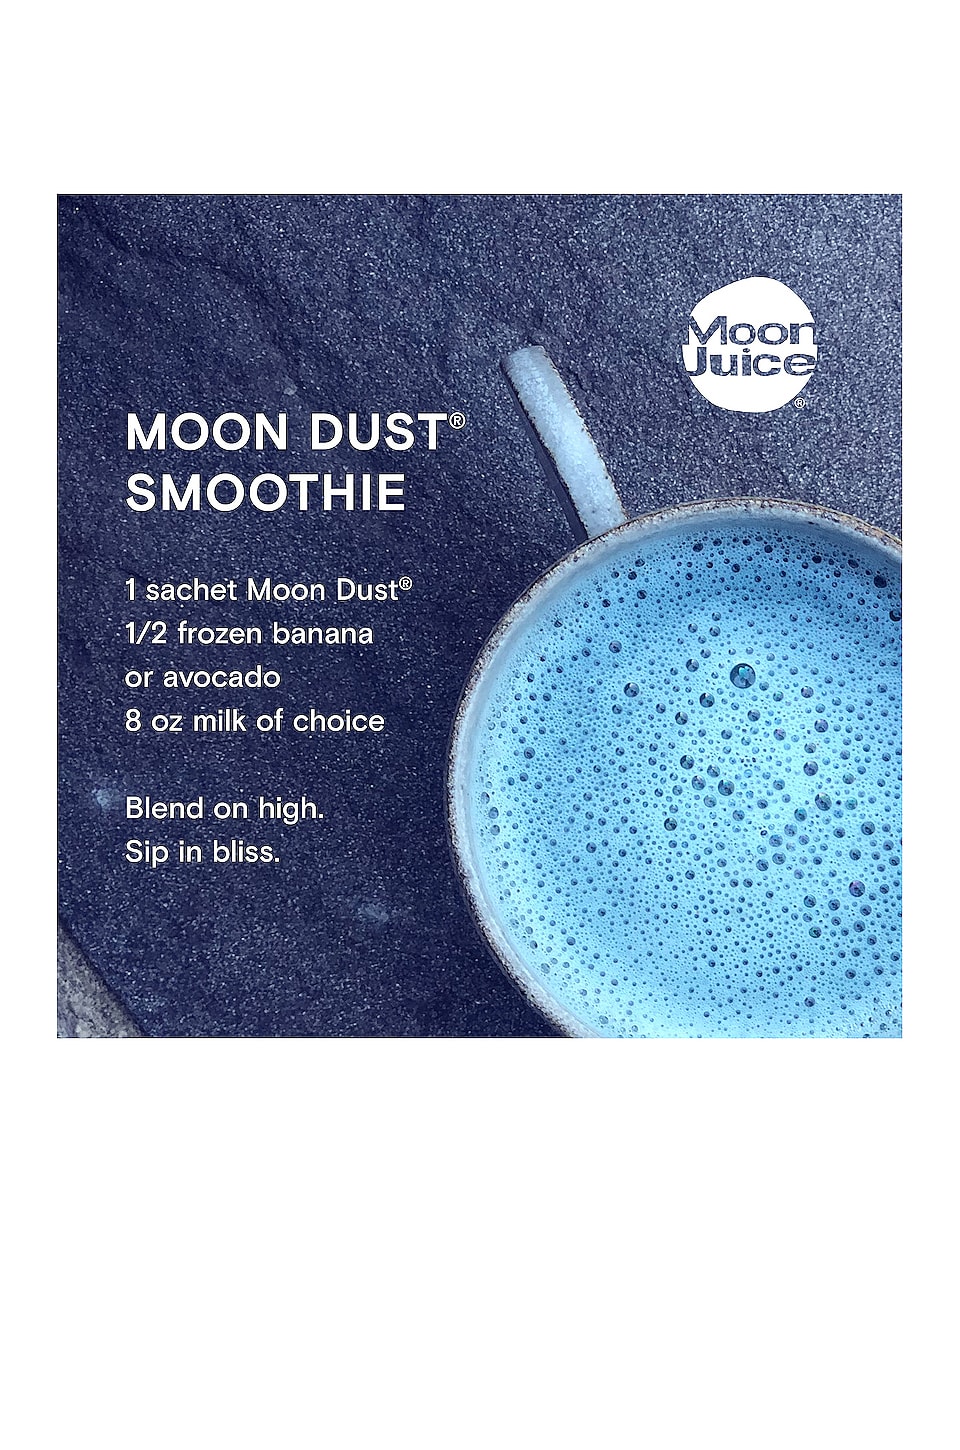 Shop Moon Juice The Full Moon Dust Box In N,a